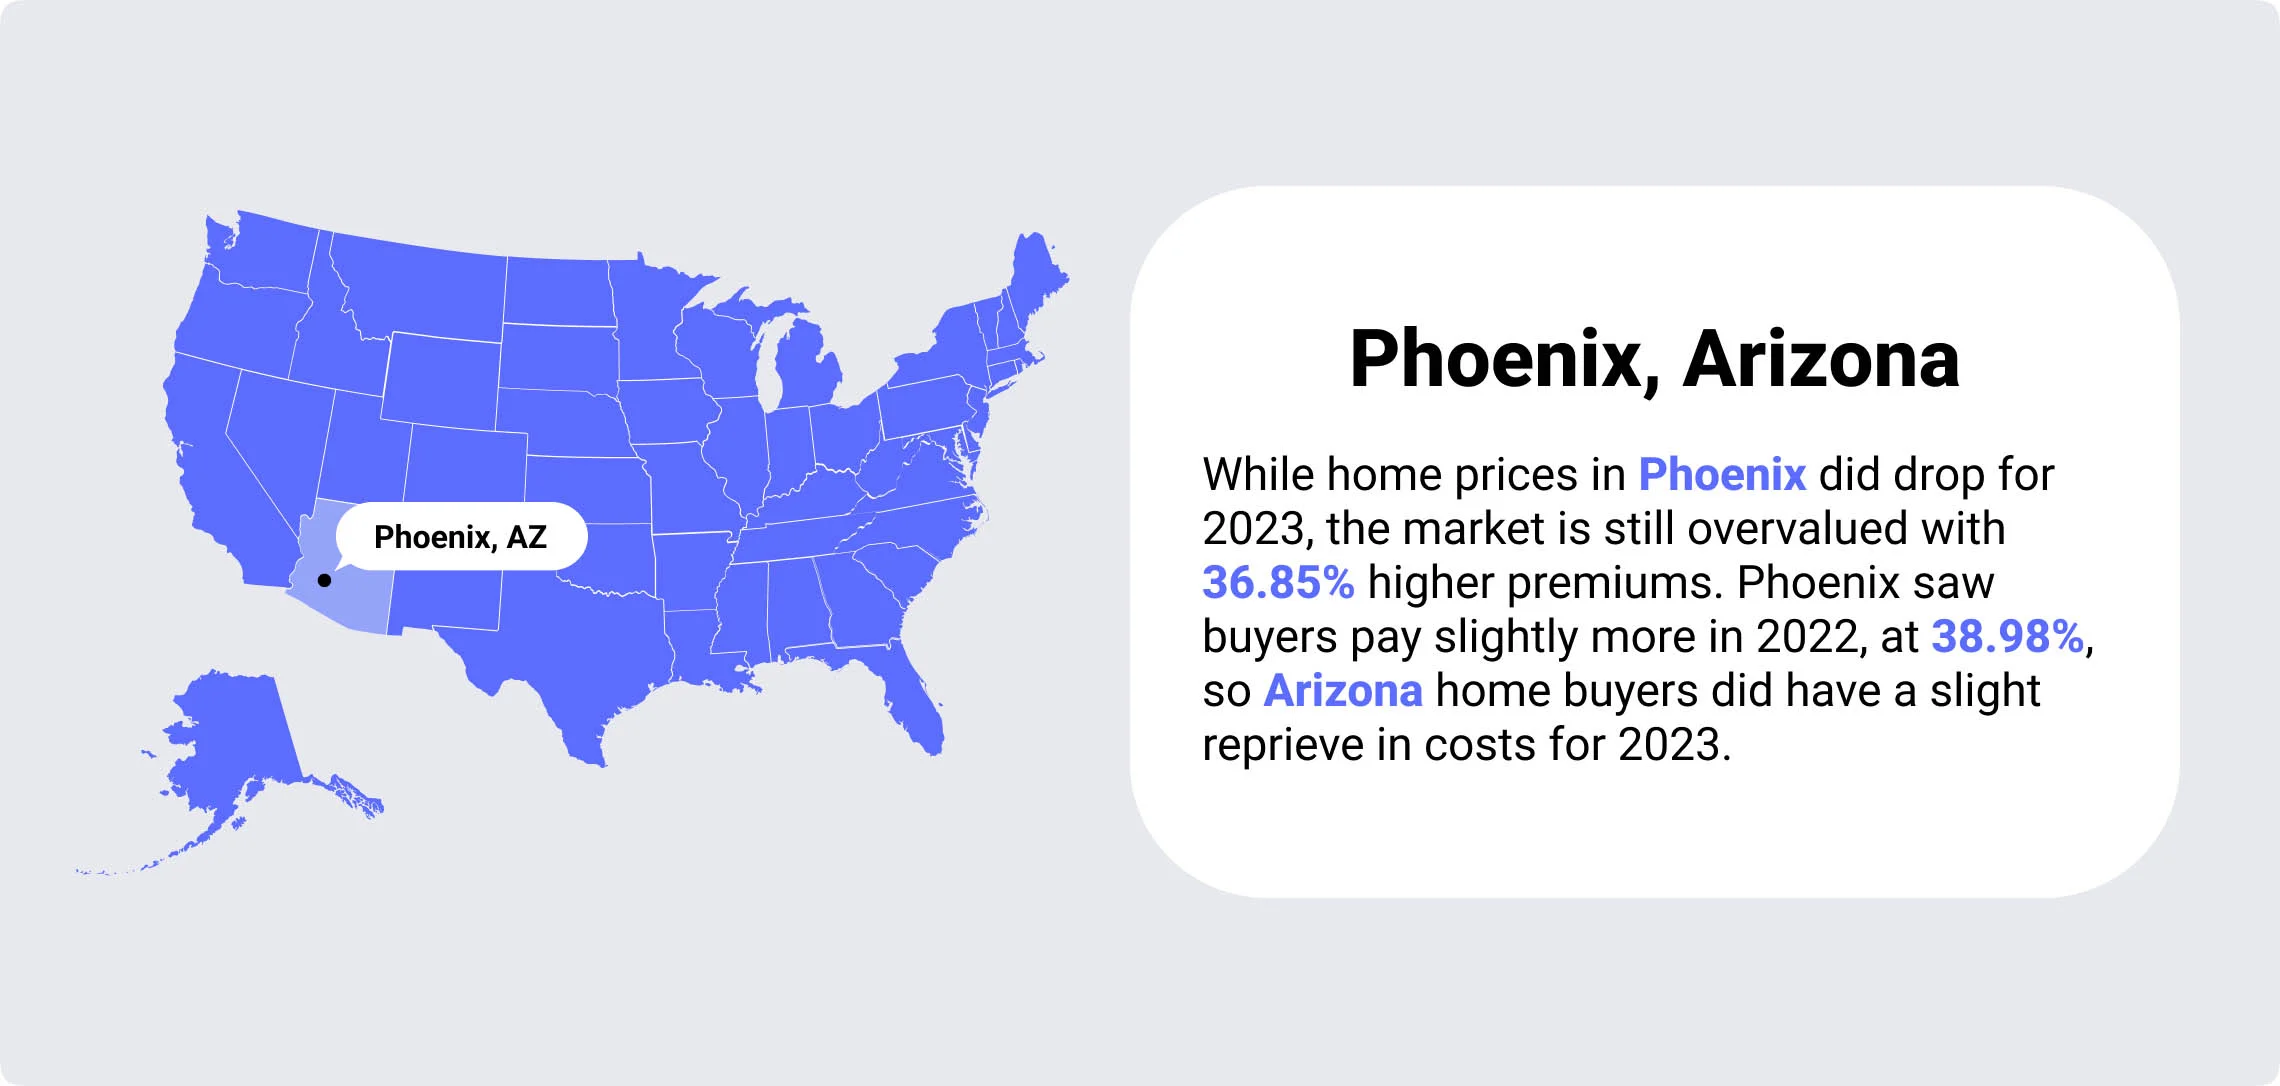 phoenix arizona overvalued housing markets